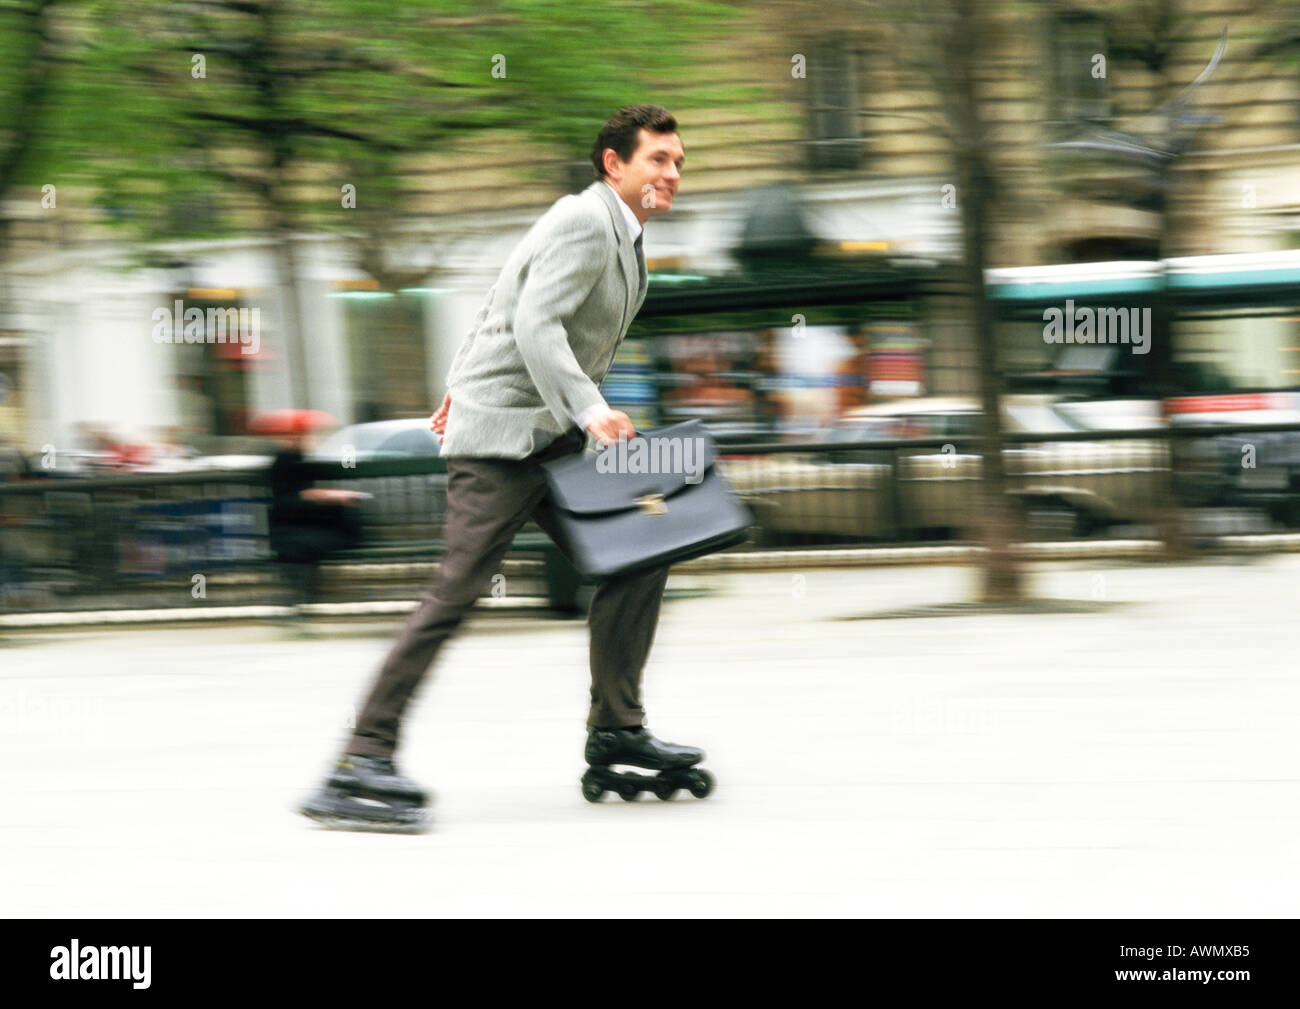 businessman-rollerblading-in-park-blurred-AWMXB5.jpg